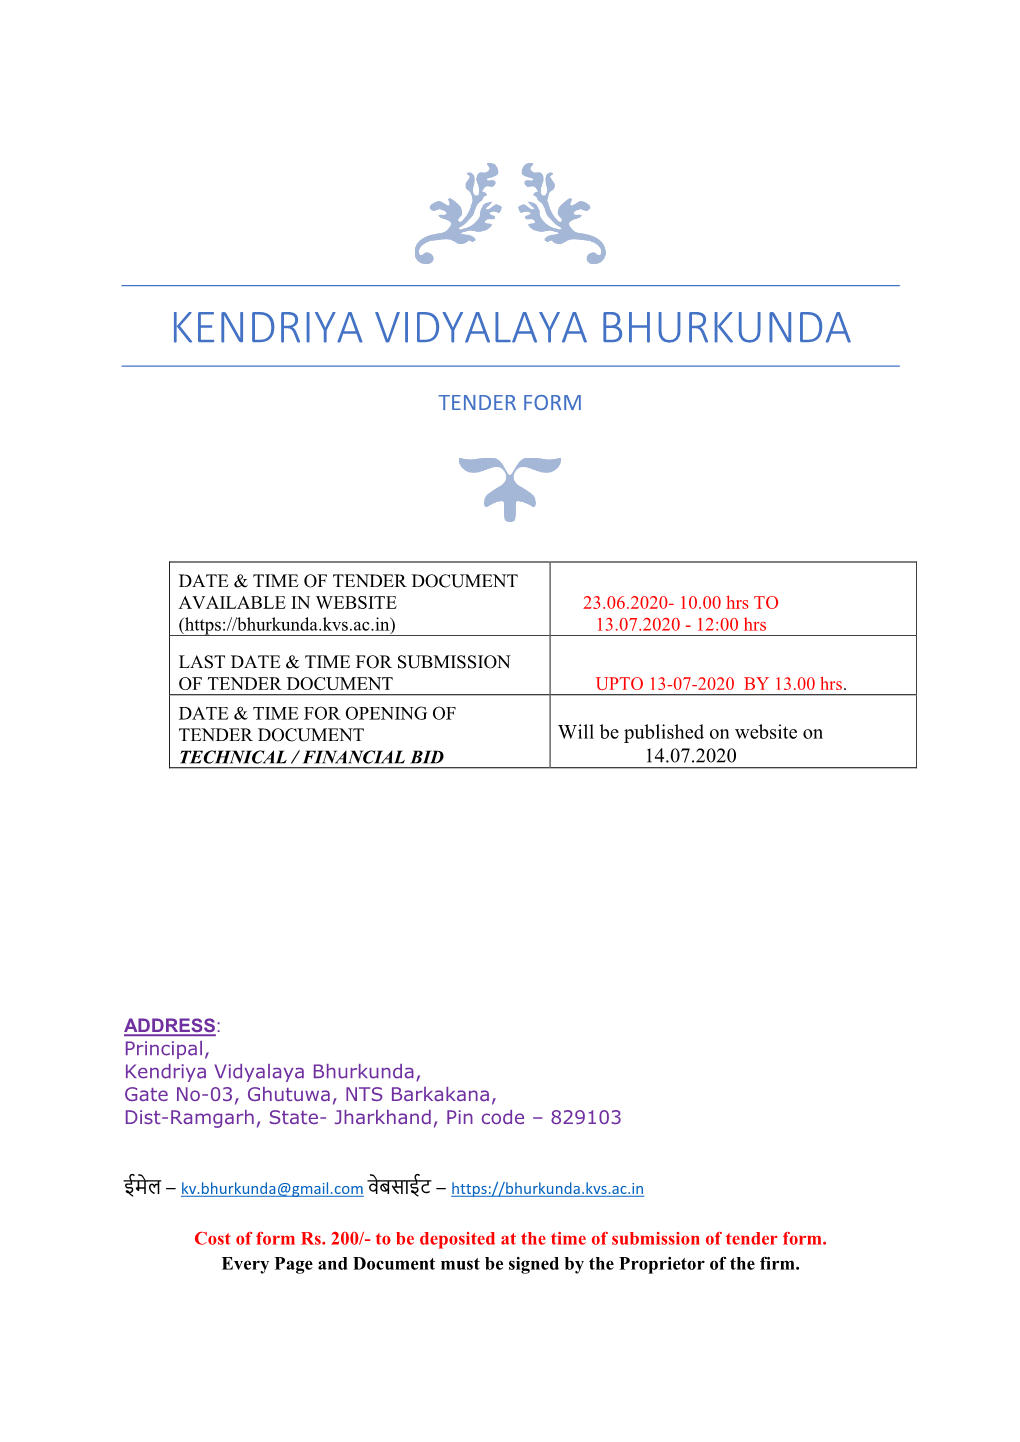 Kendriya Vidyalaya Bhurkunda